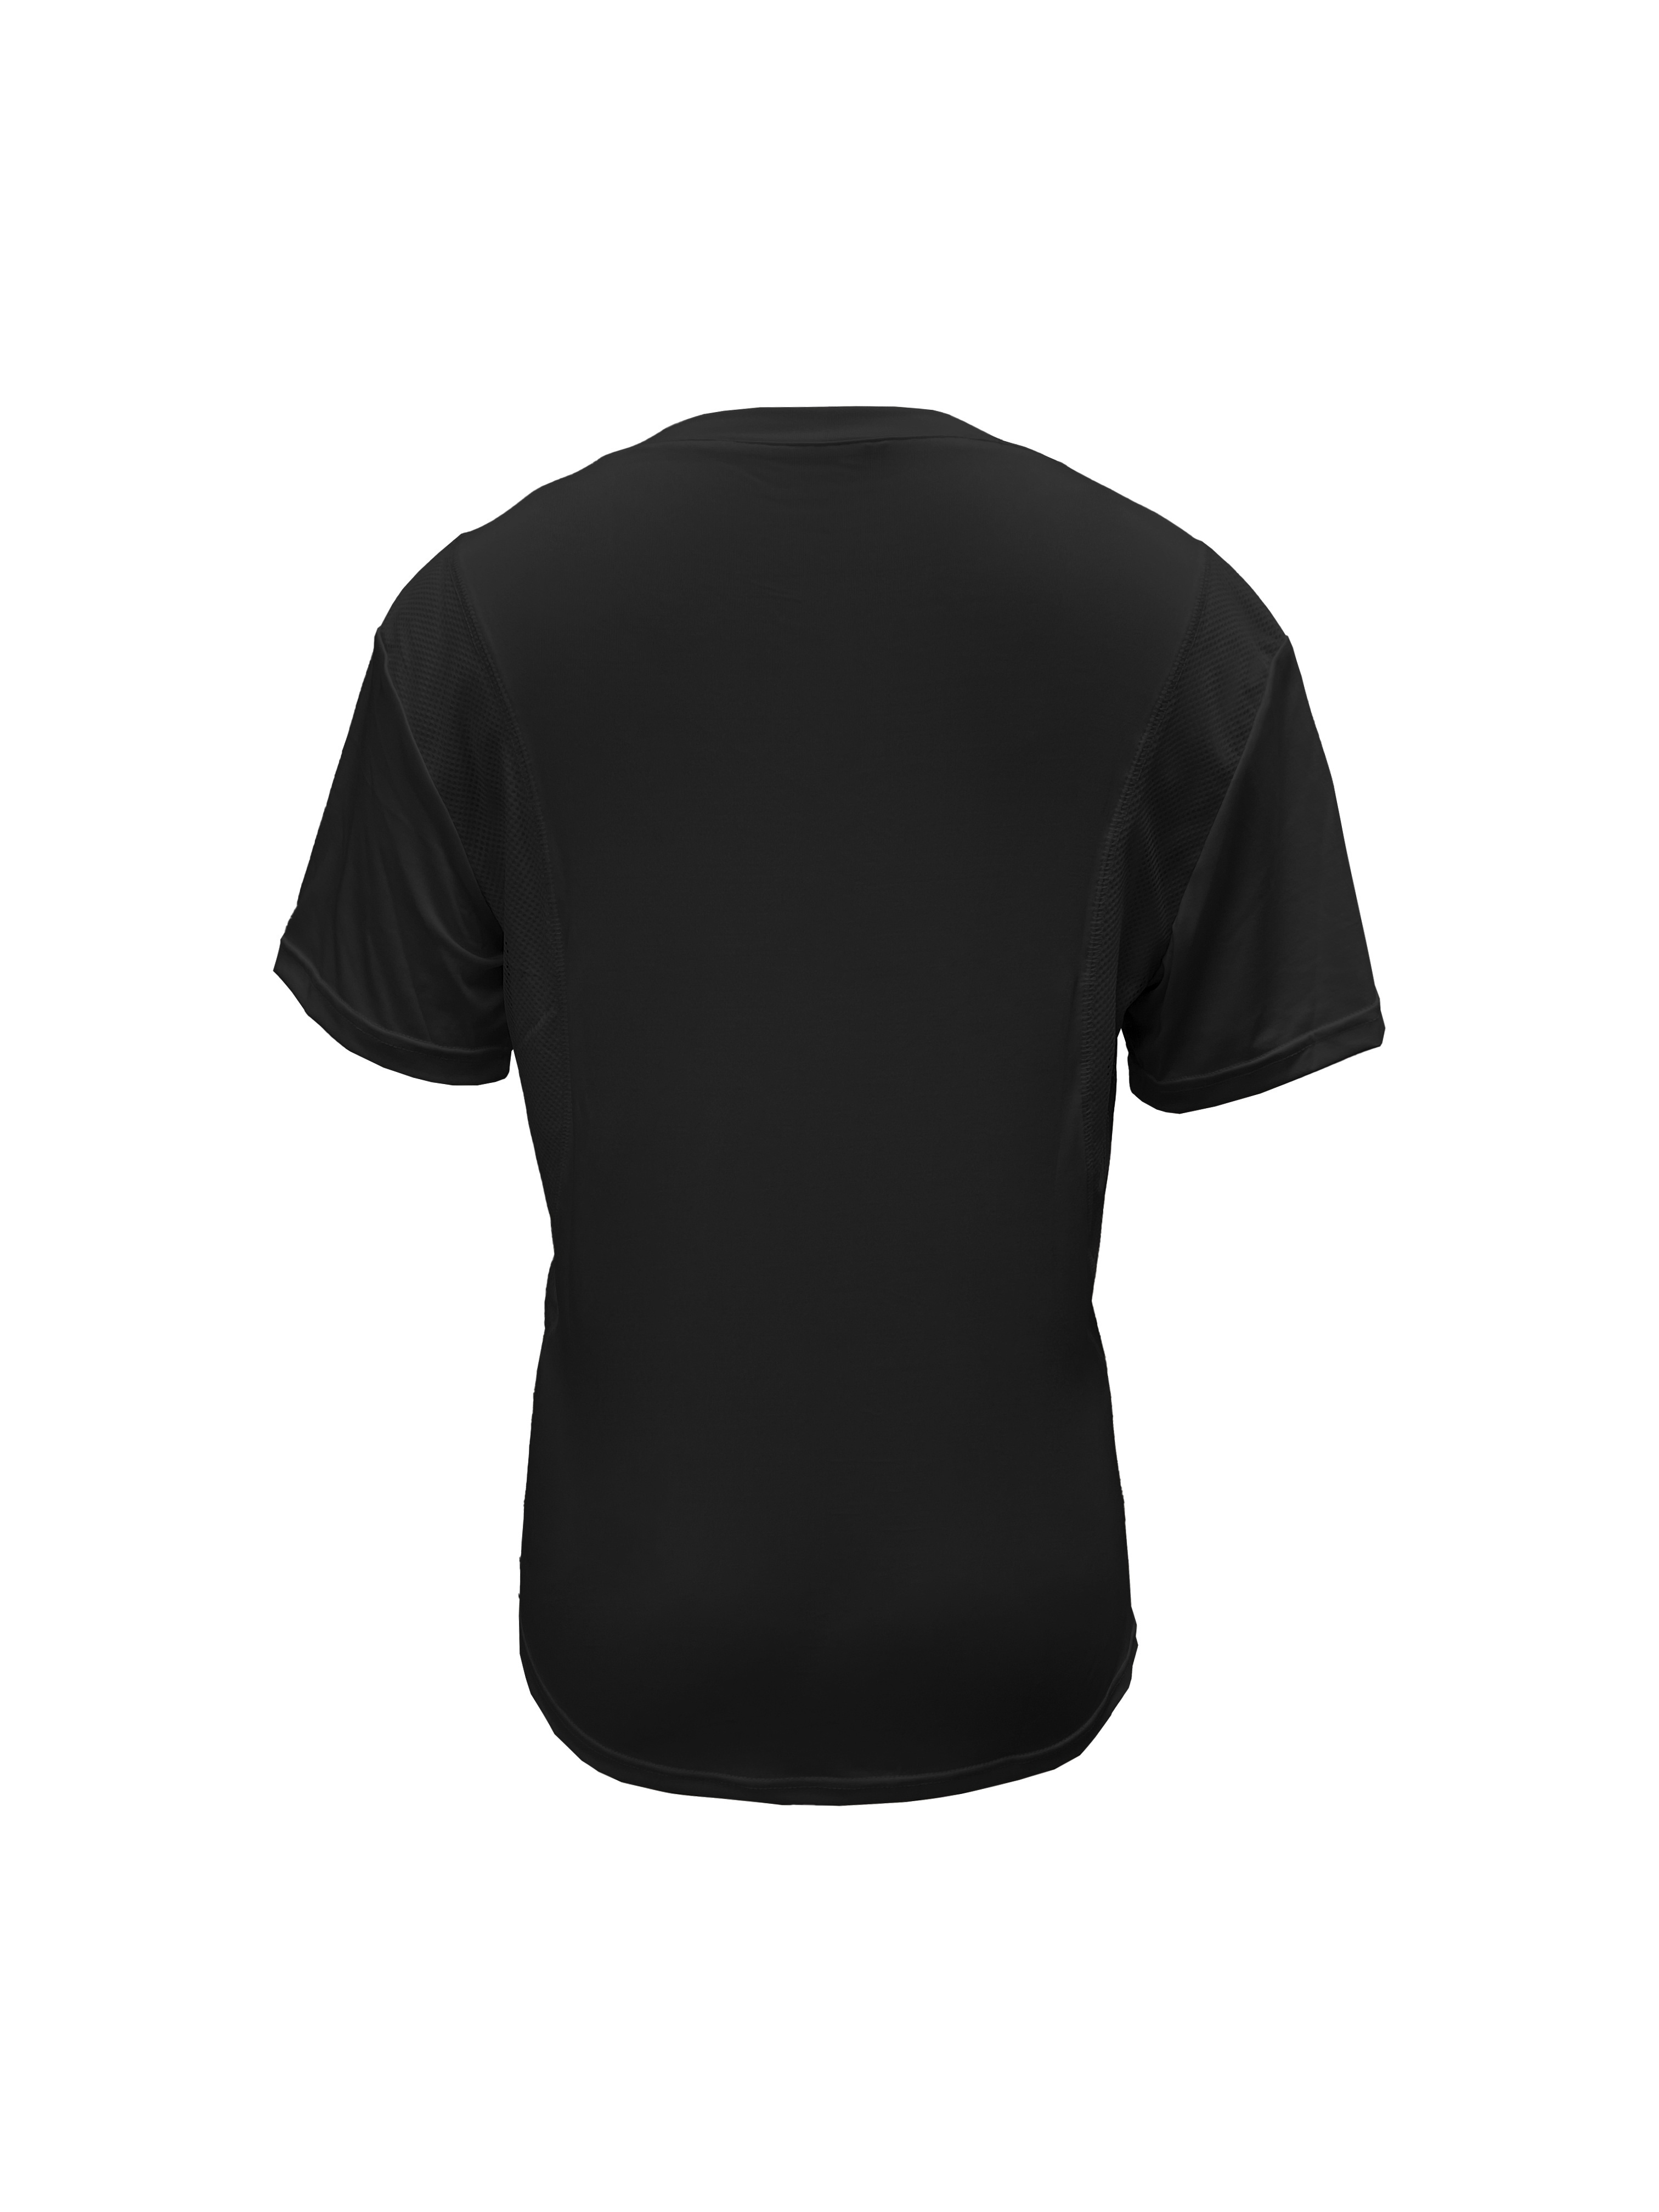 Men's Solid Short Sleeve Shirt T-Shirts Tee Lightweight Quick Dry Tactical Shirt For Fishing Running Hiking